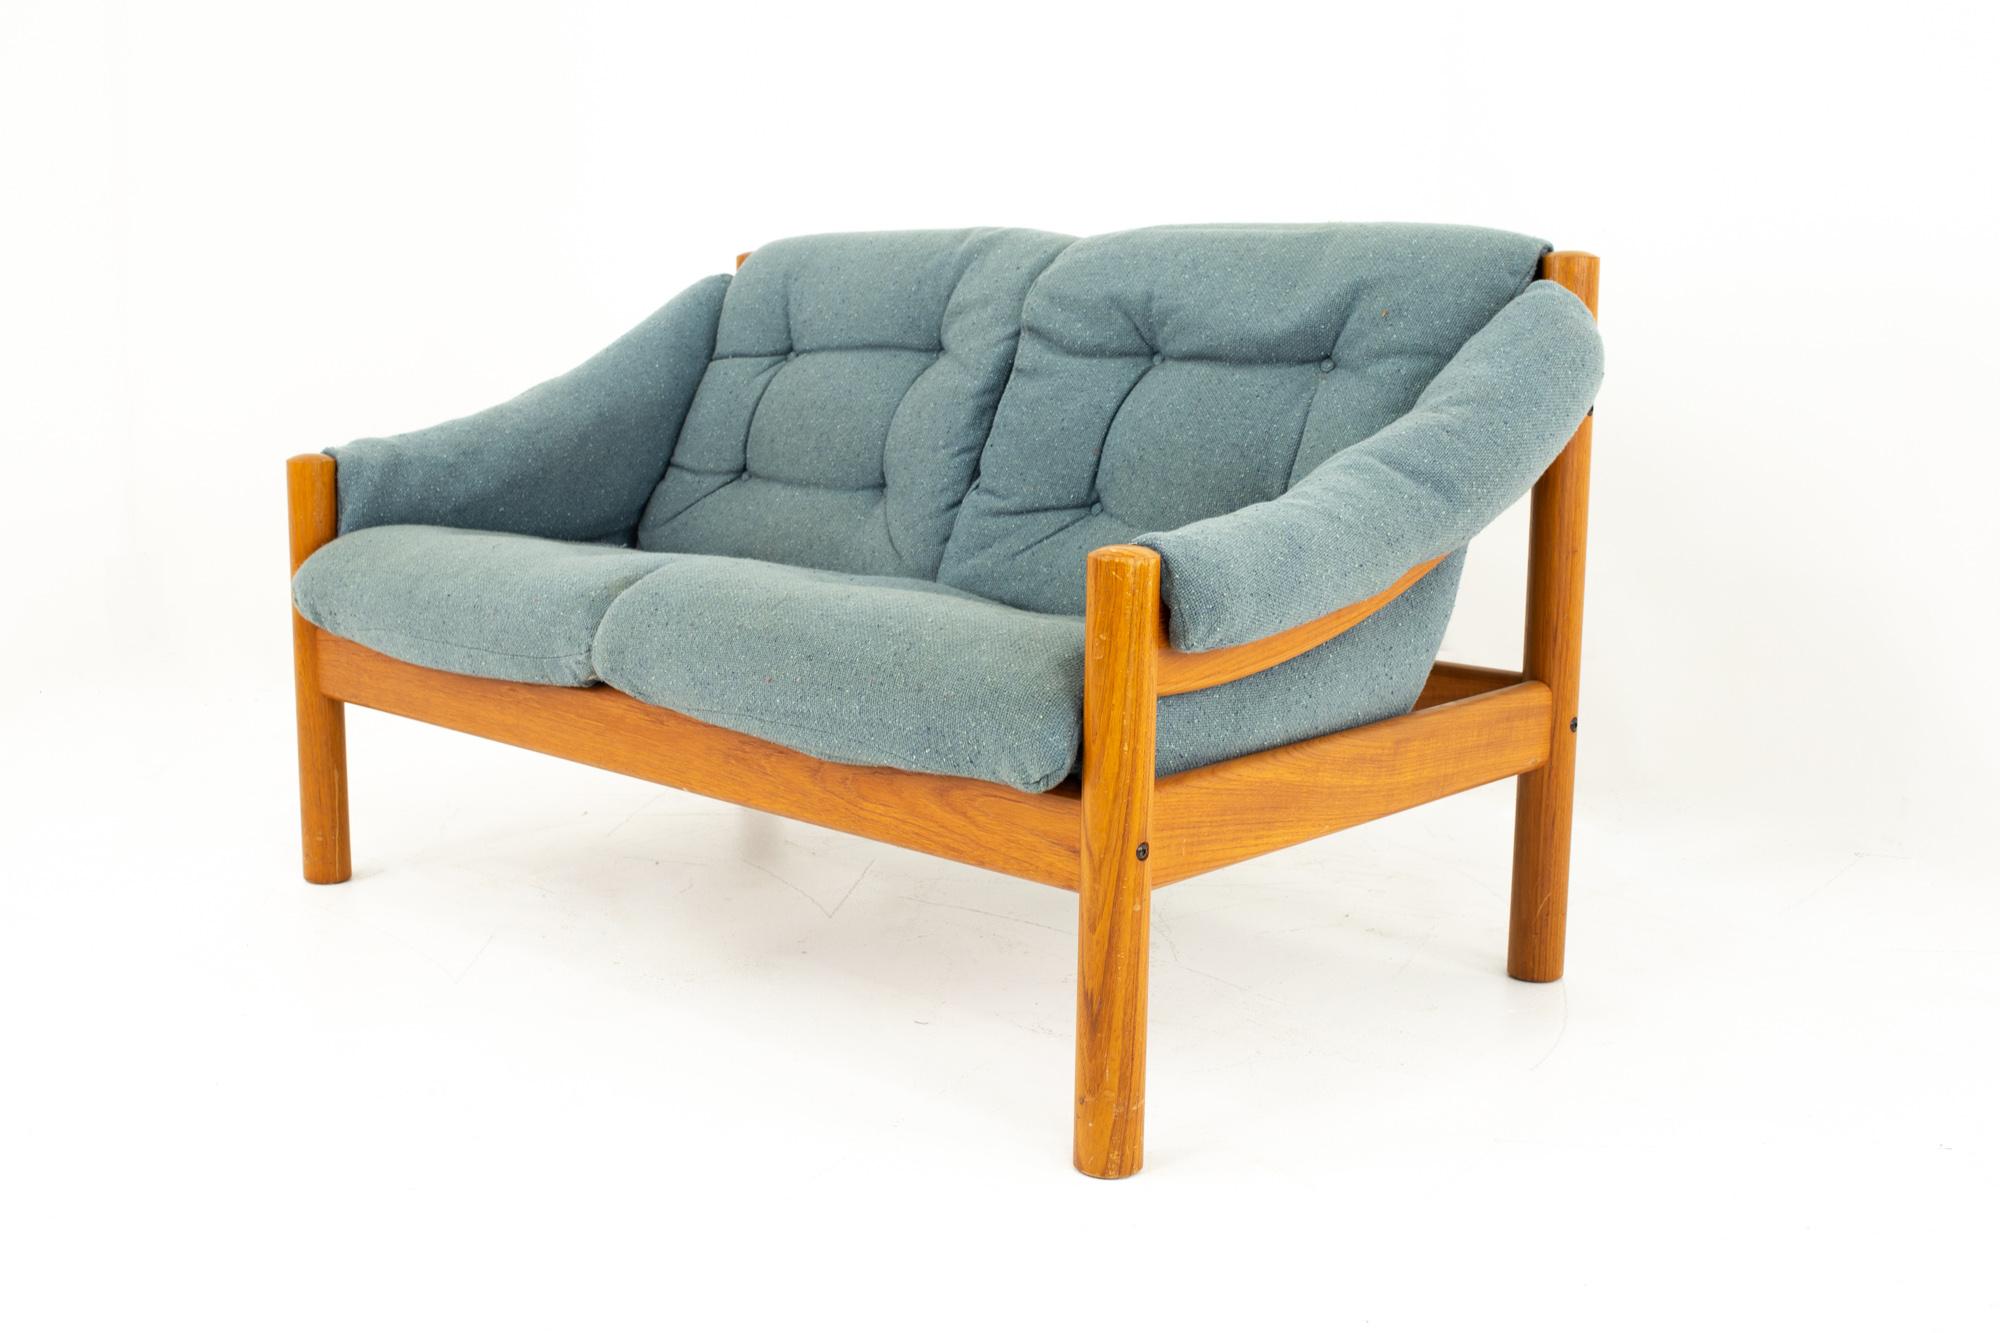 blue mid century modern sofa